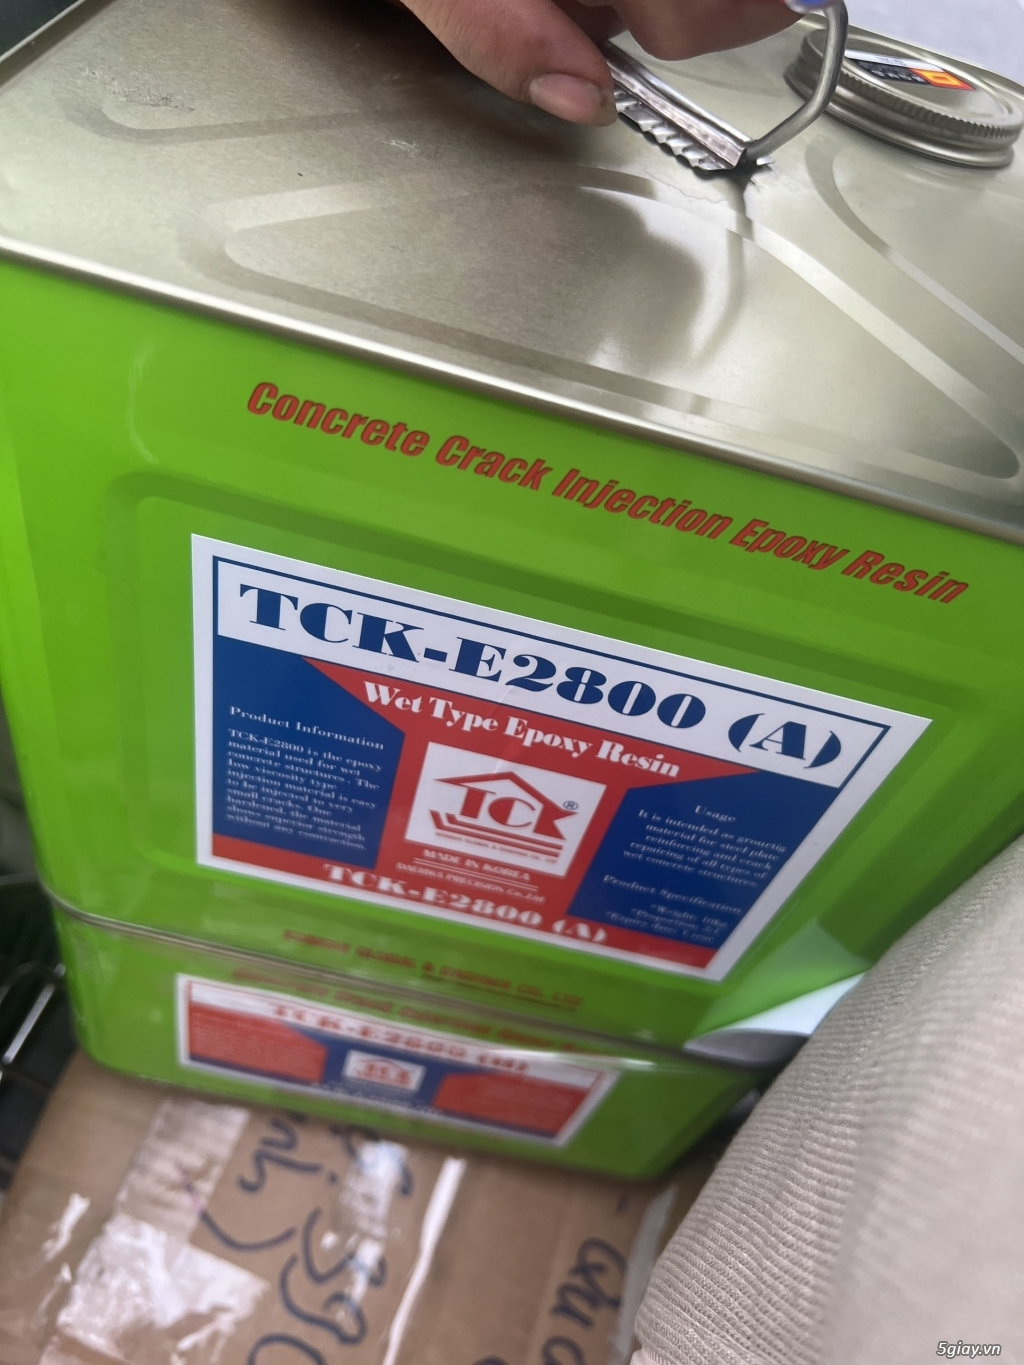 Keo chống nứt TCK-E500, epoxy 1400, E206, TCK-e2800 xuất xứ Hàn Quốc - 2